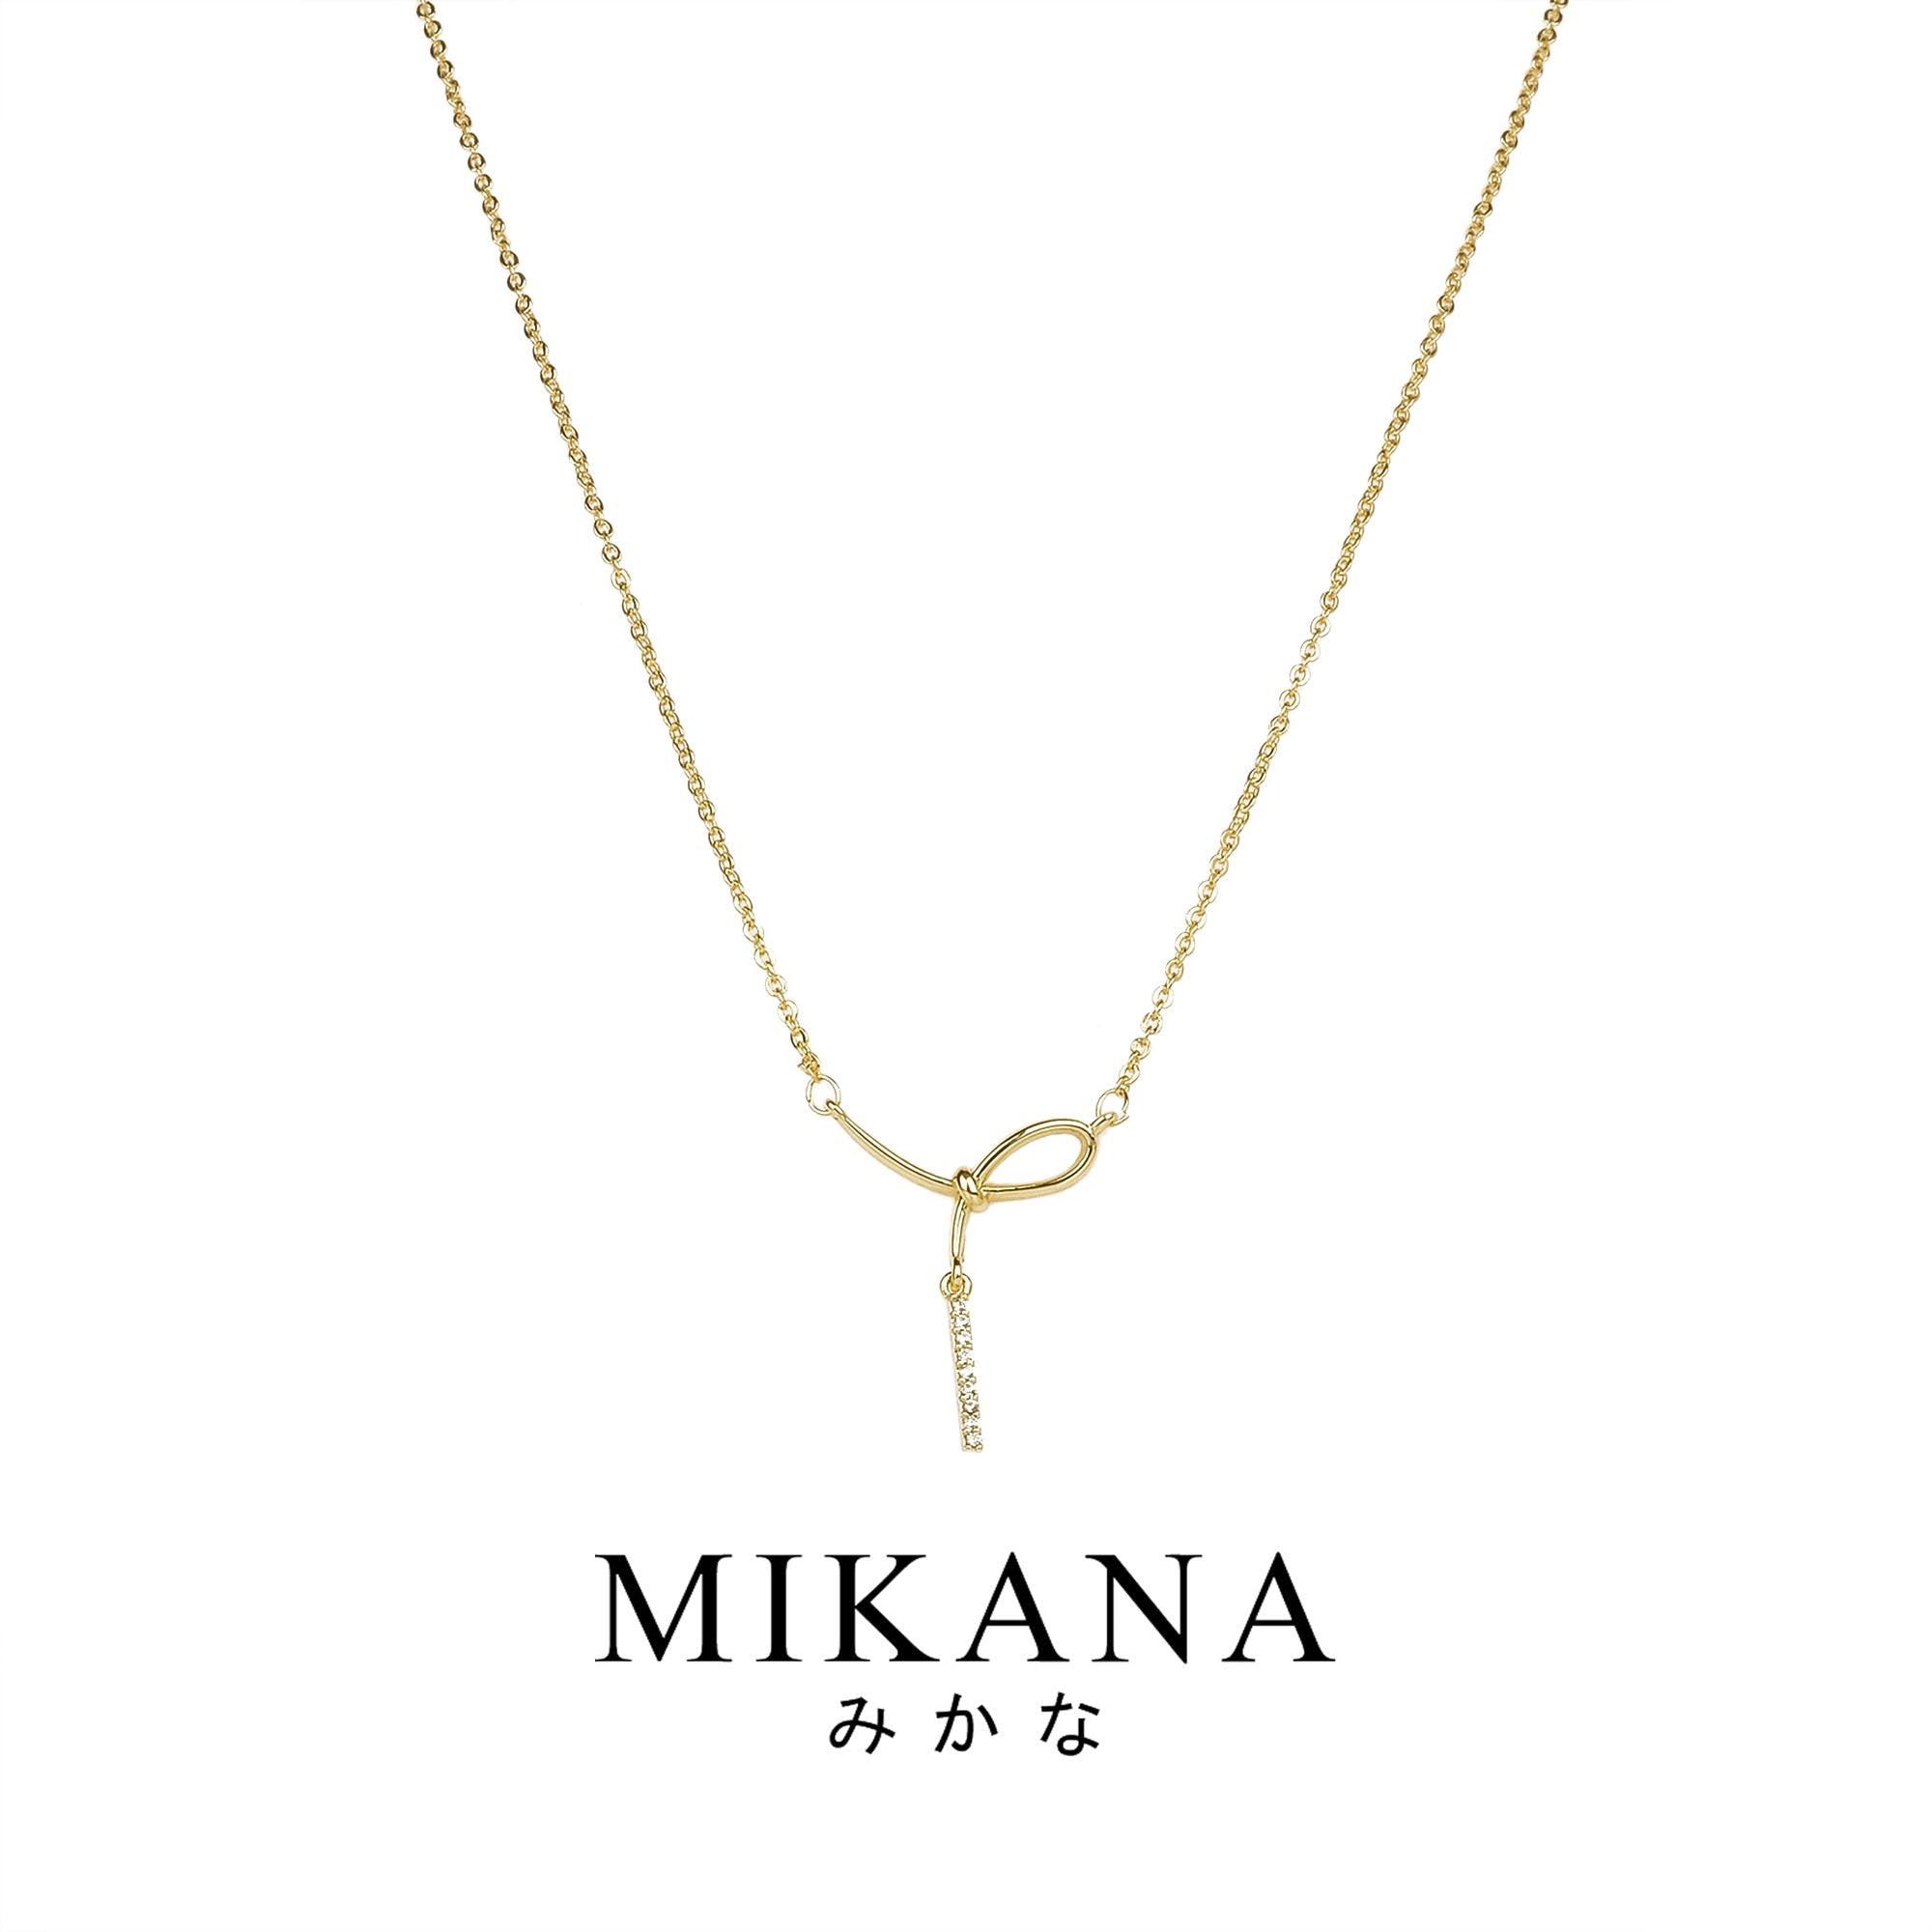 Shinoa Pendant Necklace